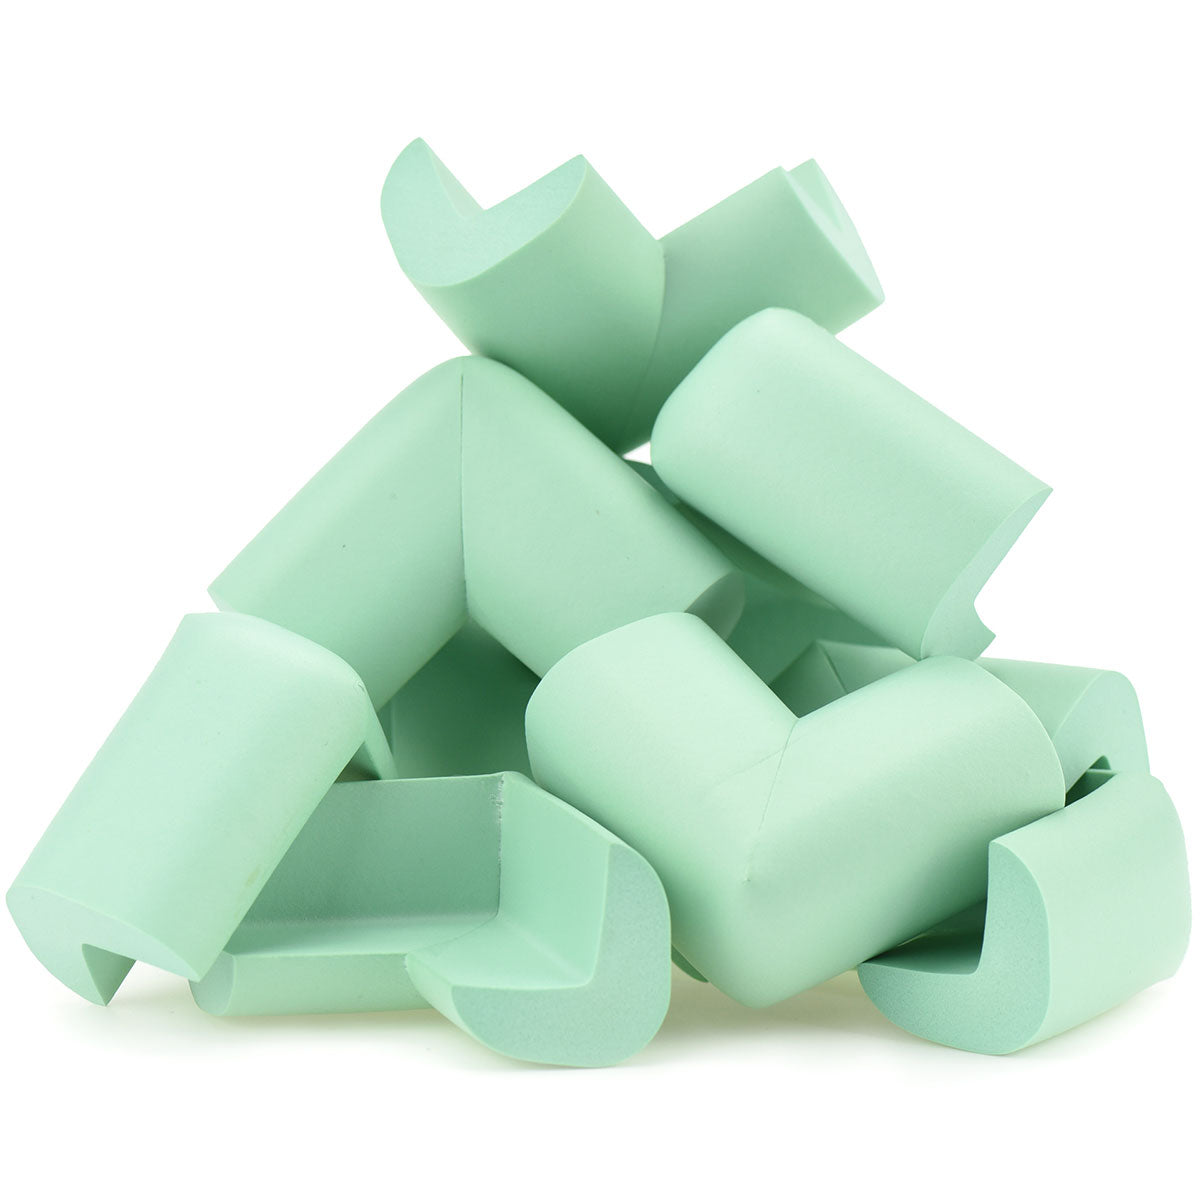 12 Pieces Mint Green Jumbo L-Shaped Foam Corner Protectors